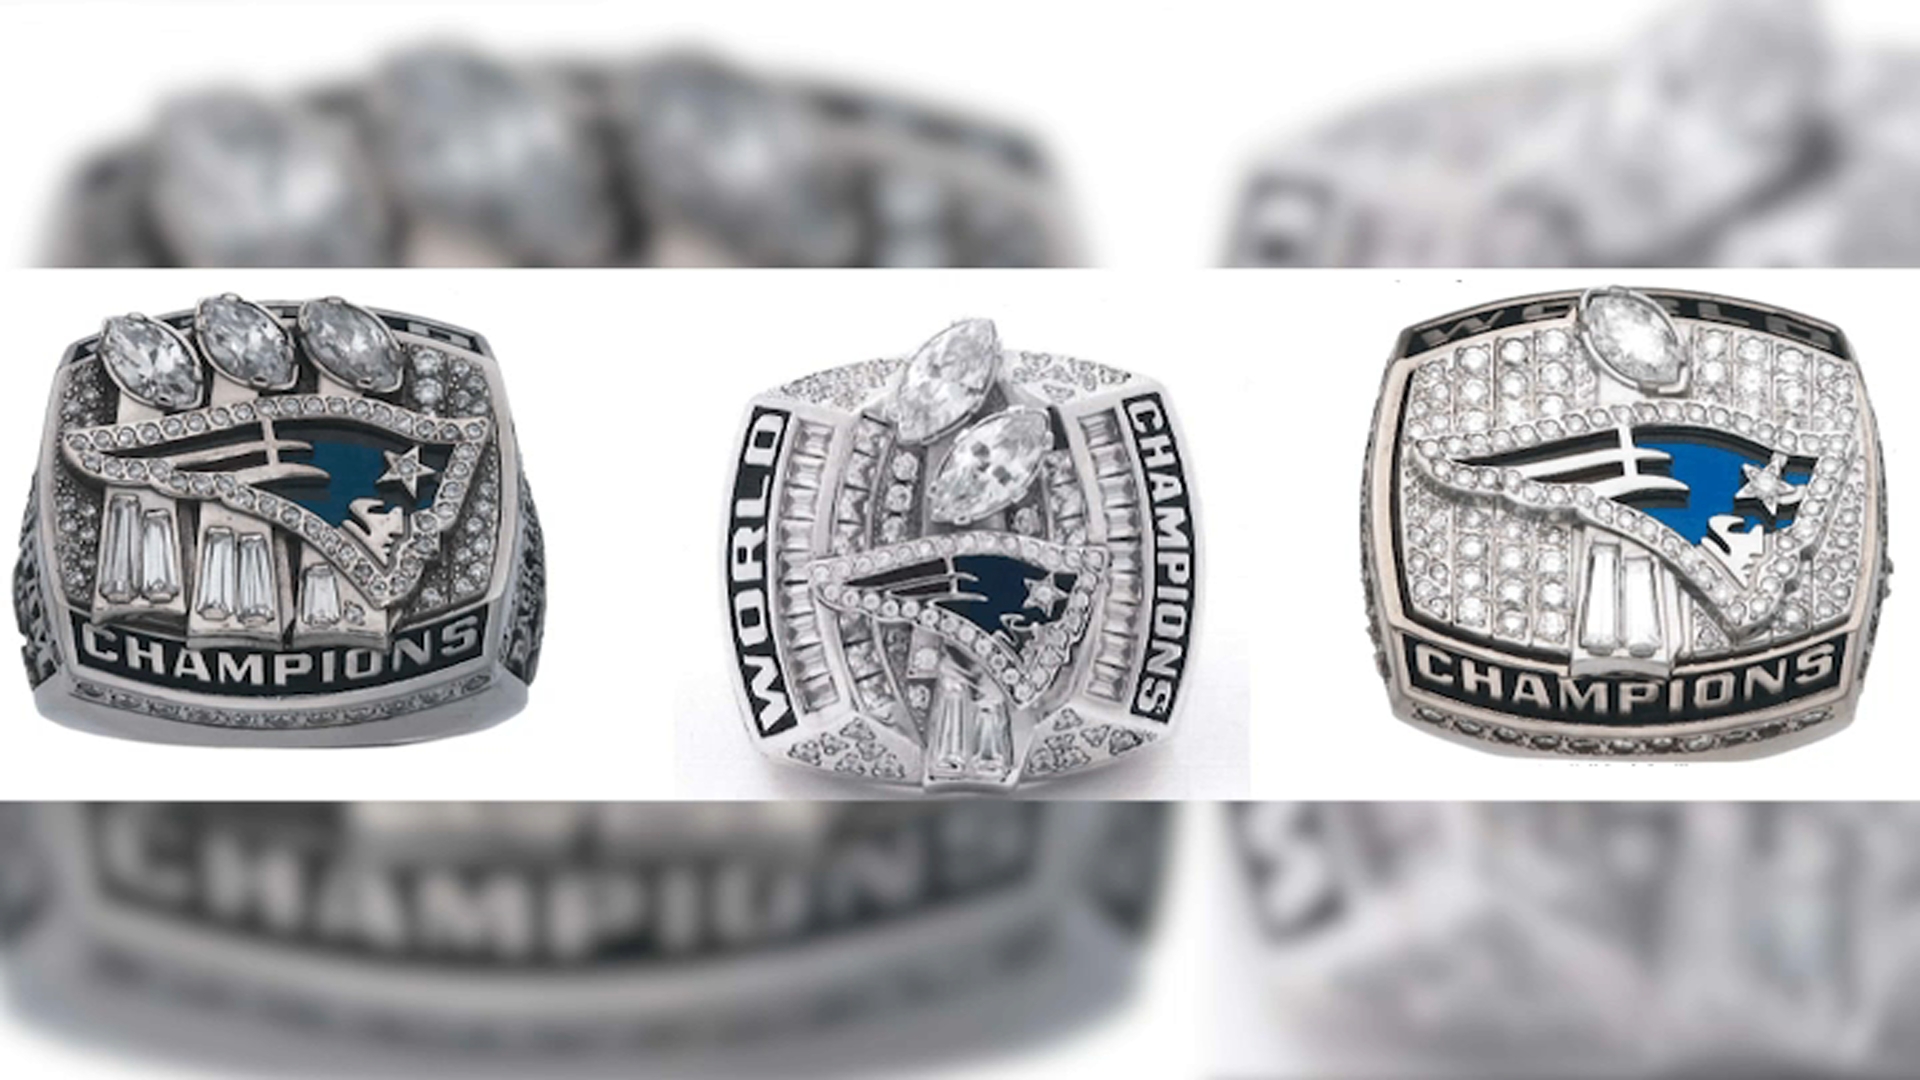 Patriots owner Kraft's Super Bowl ring sells for $1.025 million | Reuters